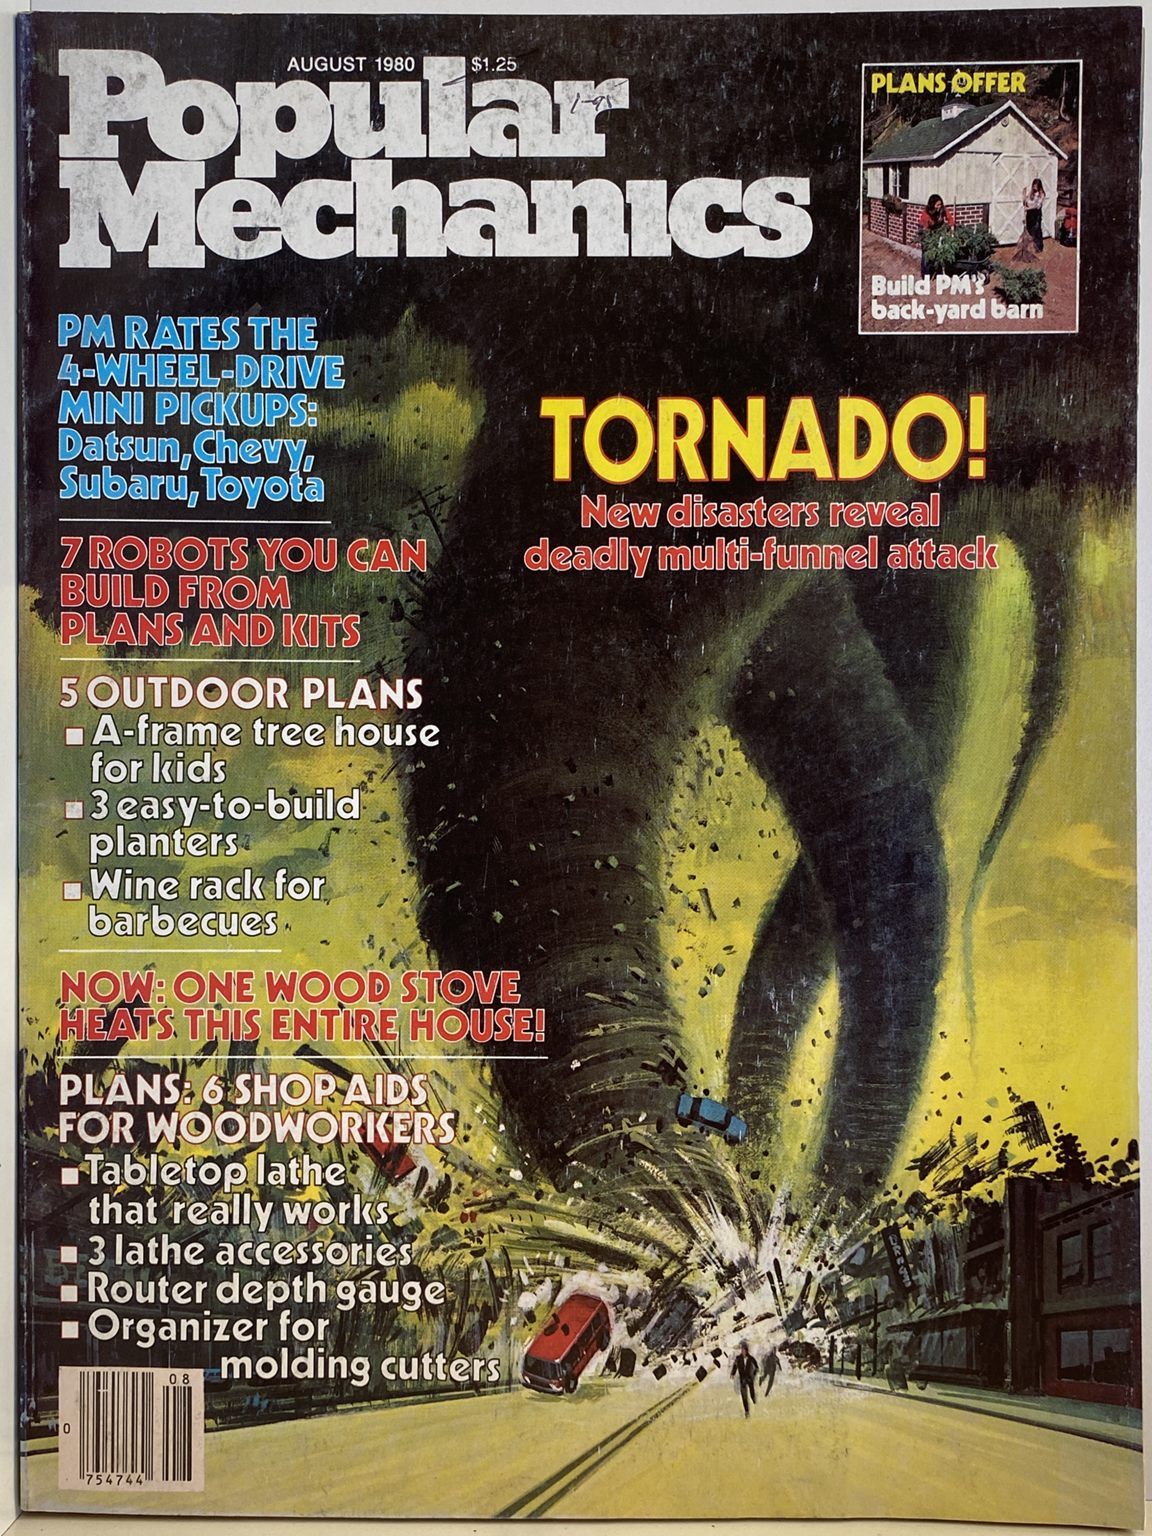 VINTAGE MAGAZINE: Popular Mechanics - Vol. 154, No. 2 - August 1980